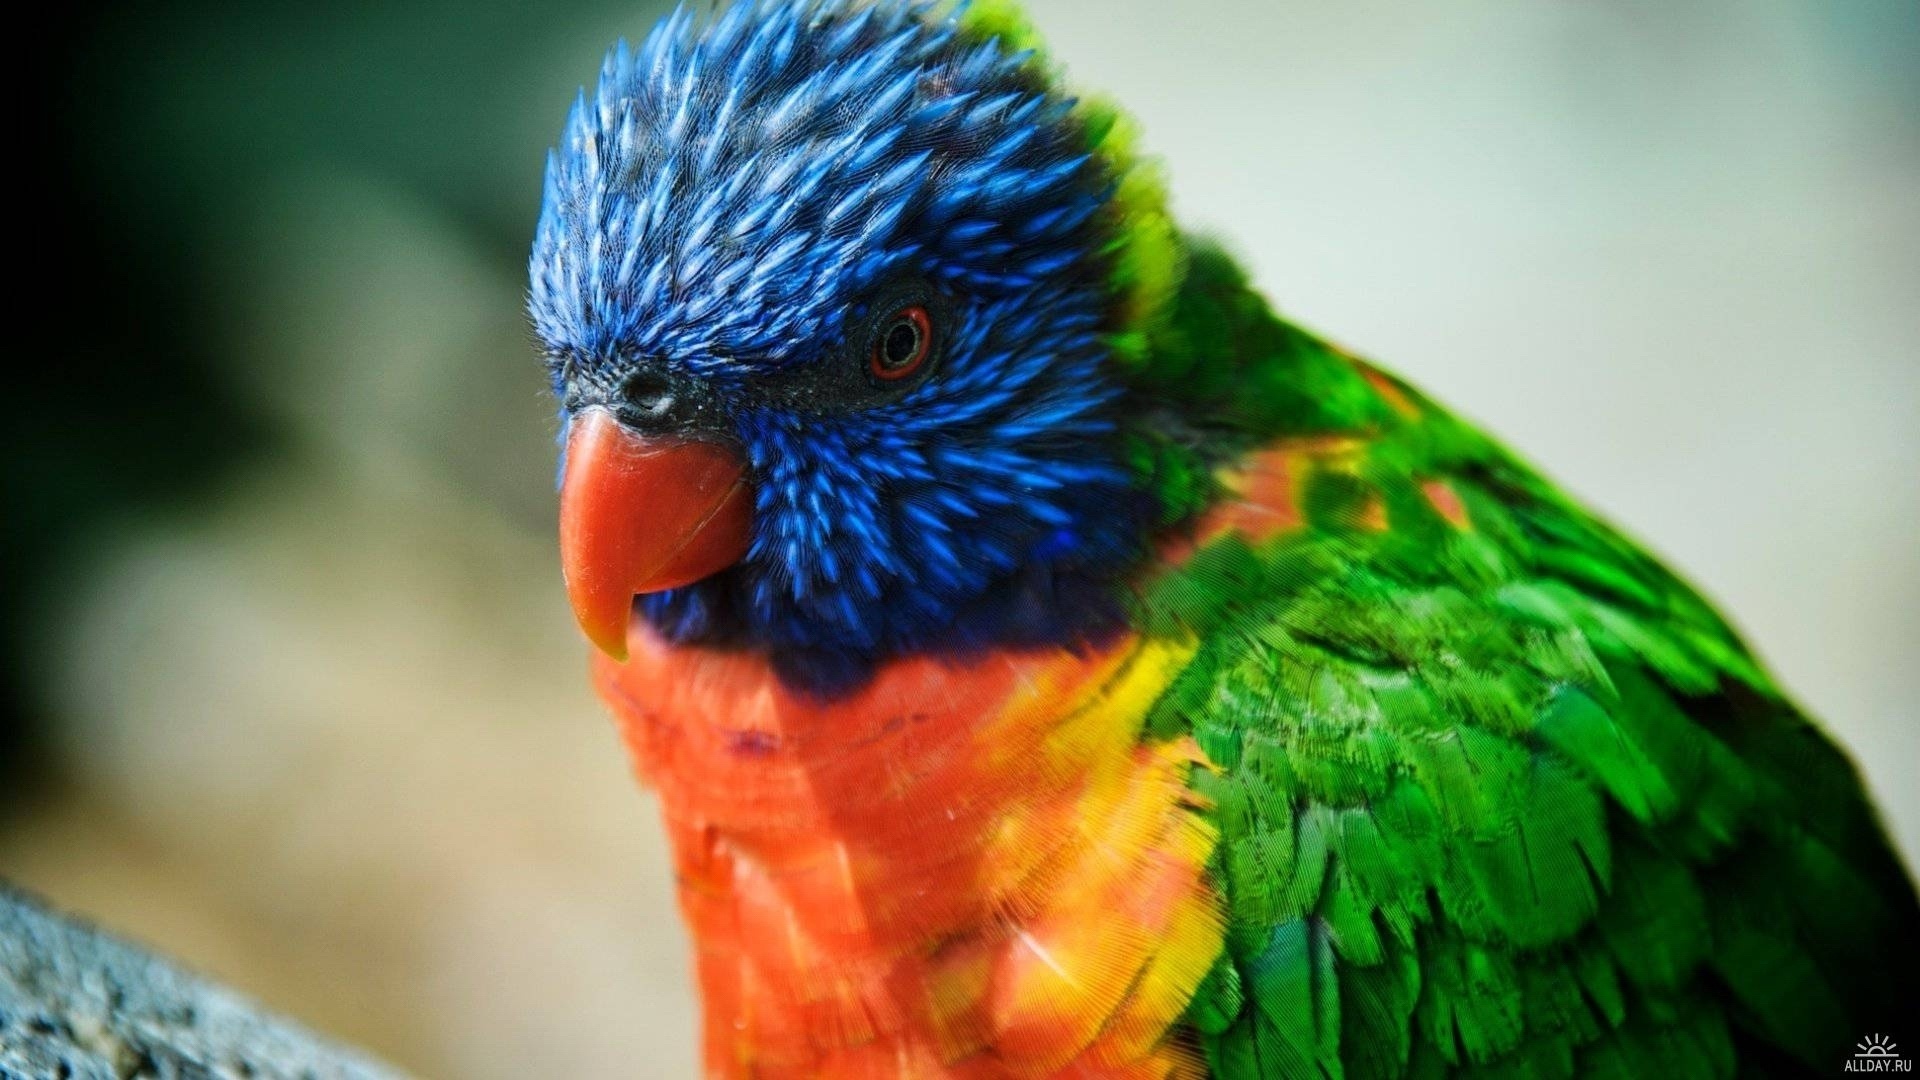 Colorful Bird desktop wallpaper free download